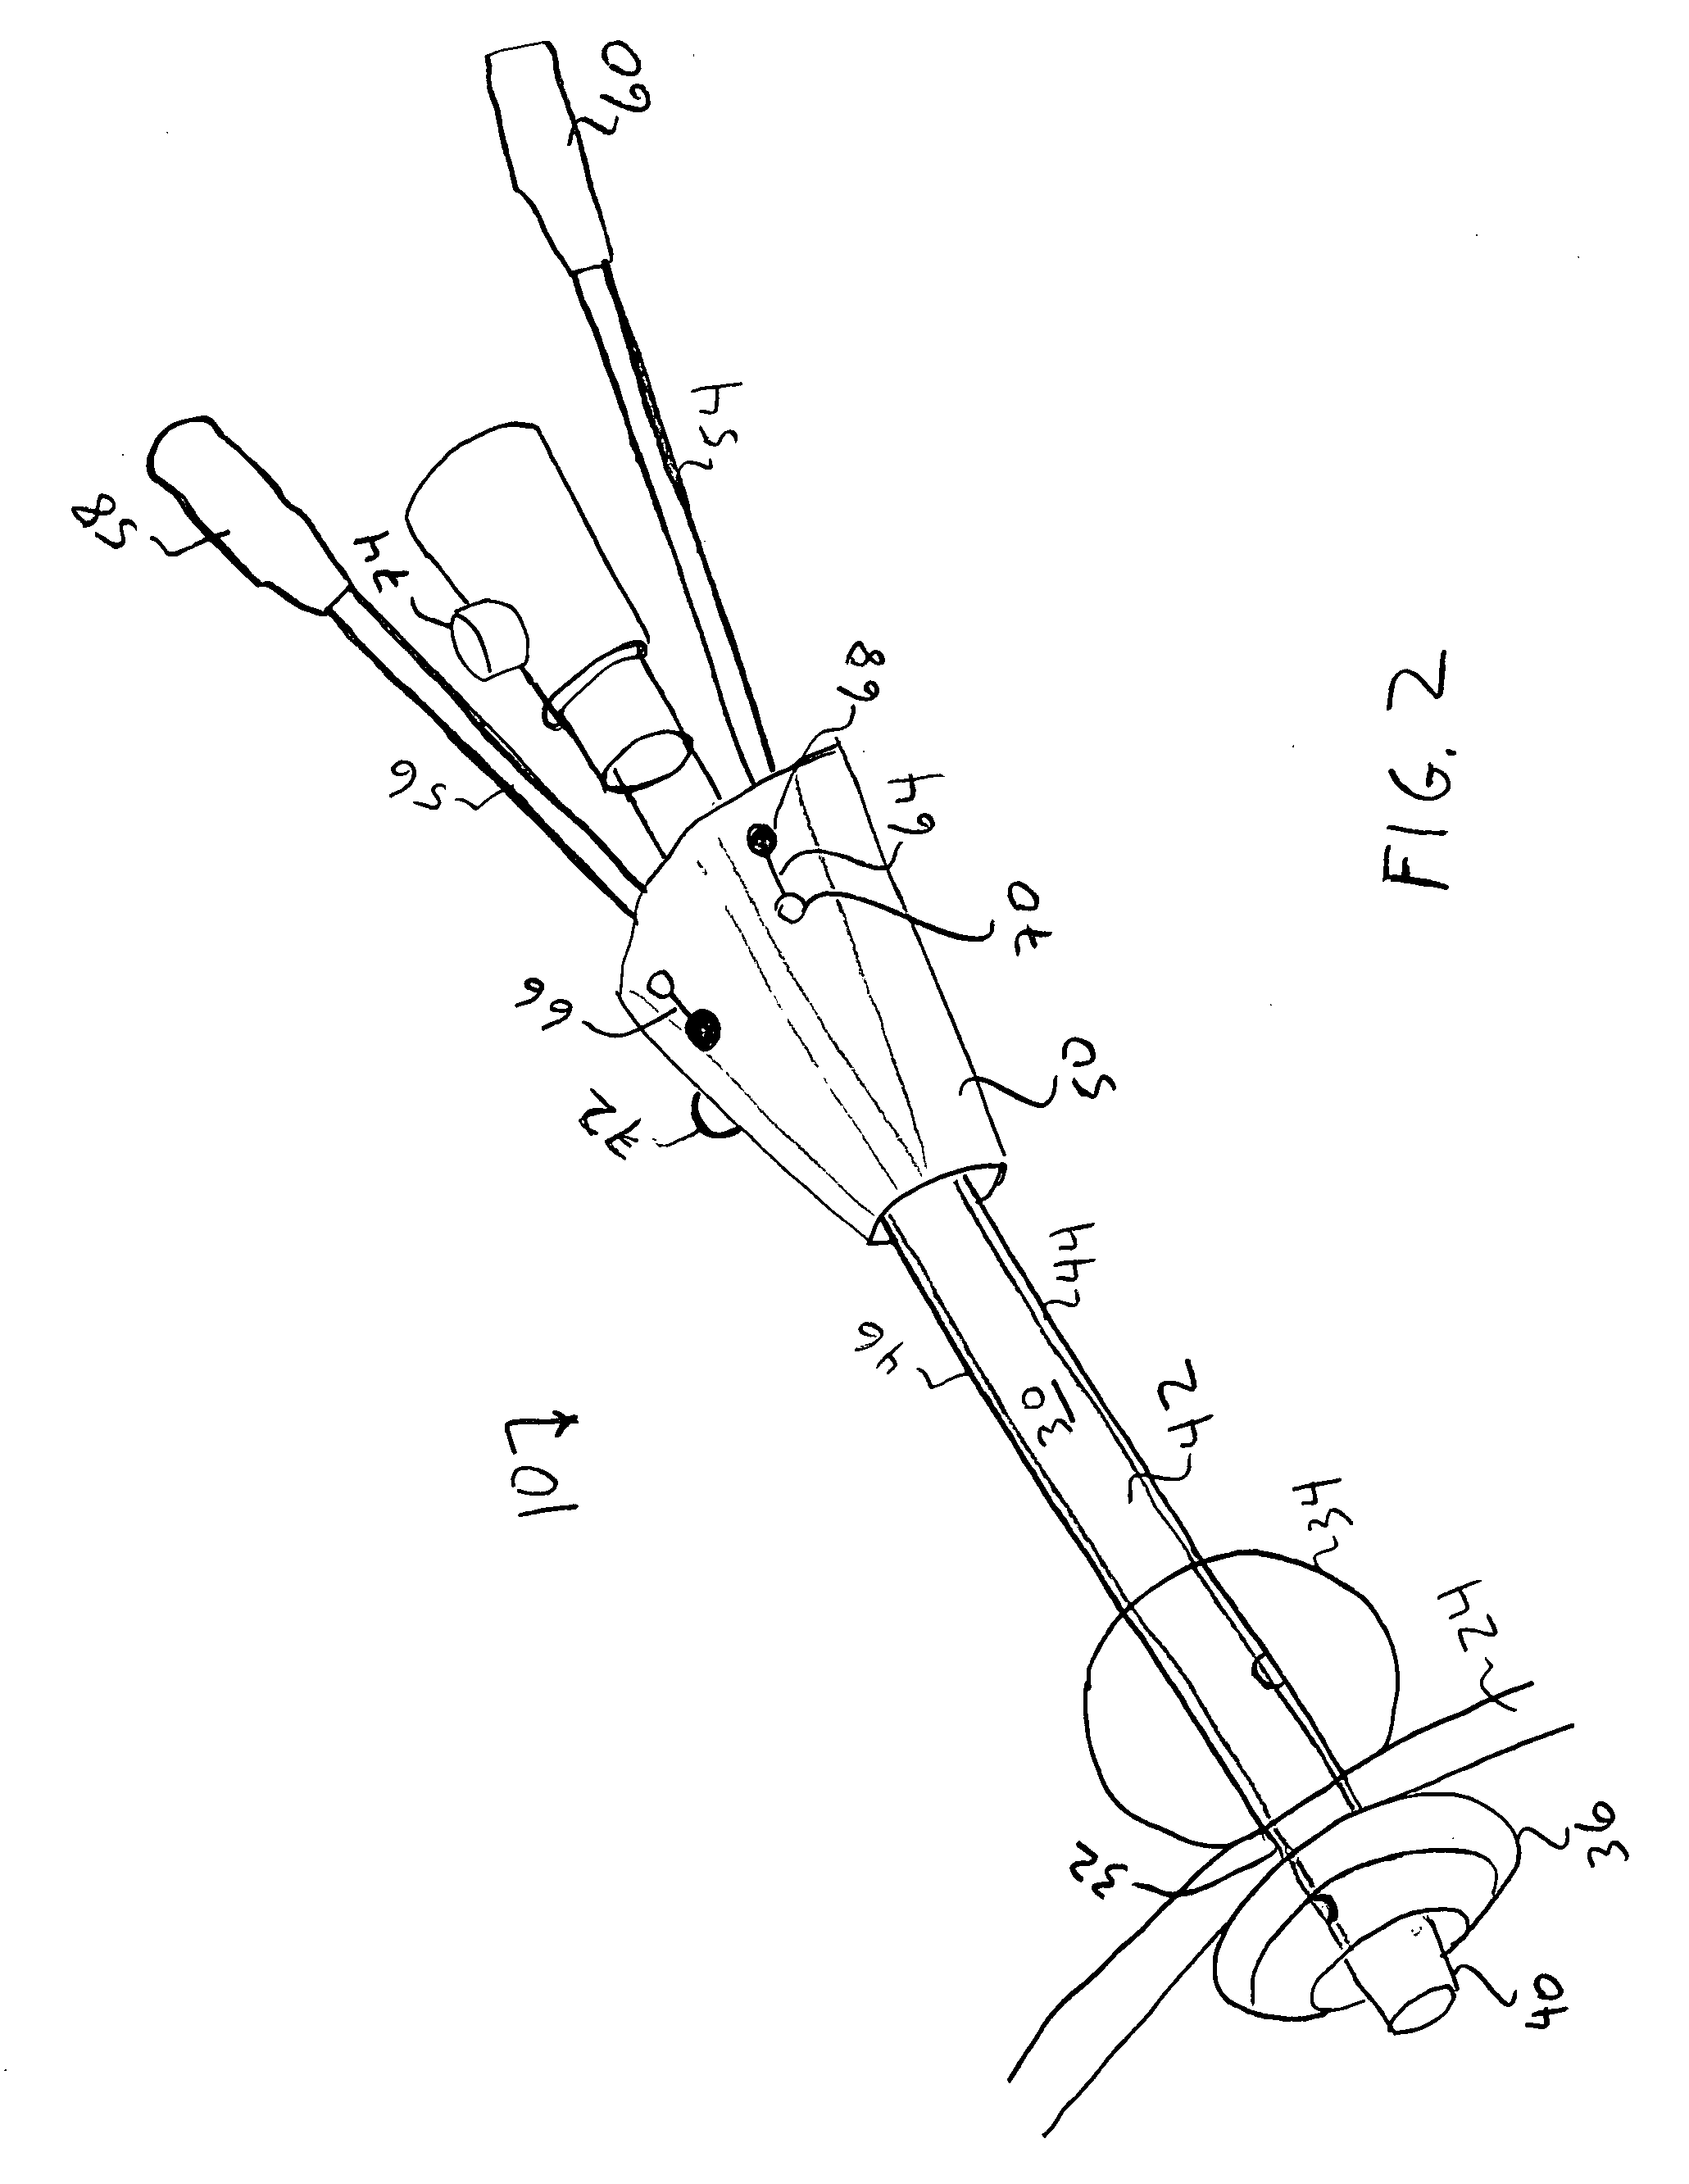 Instrument port